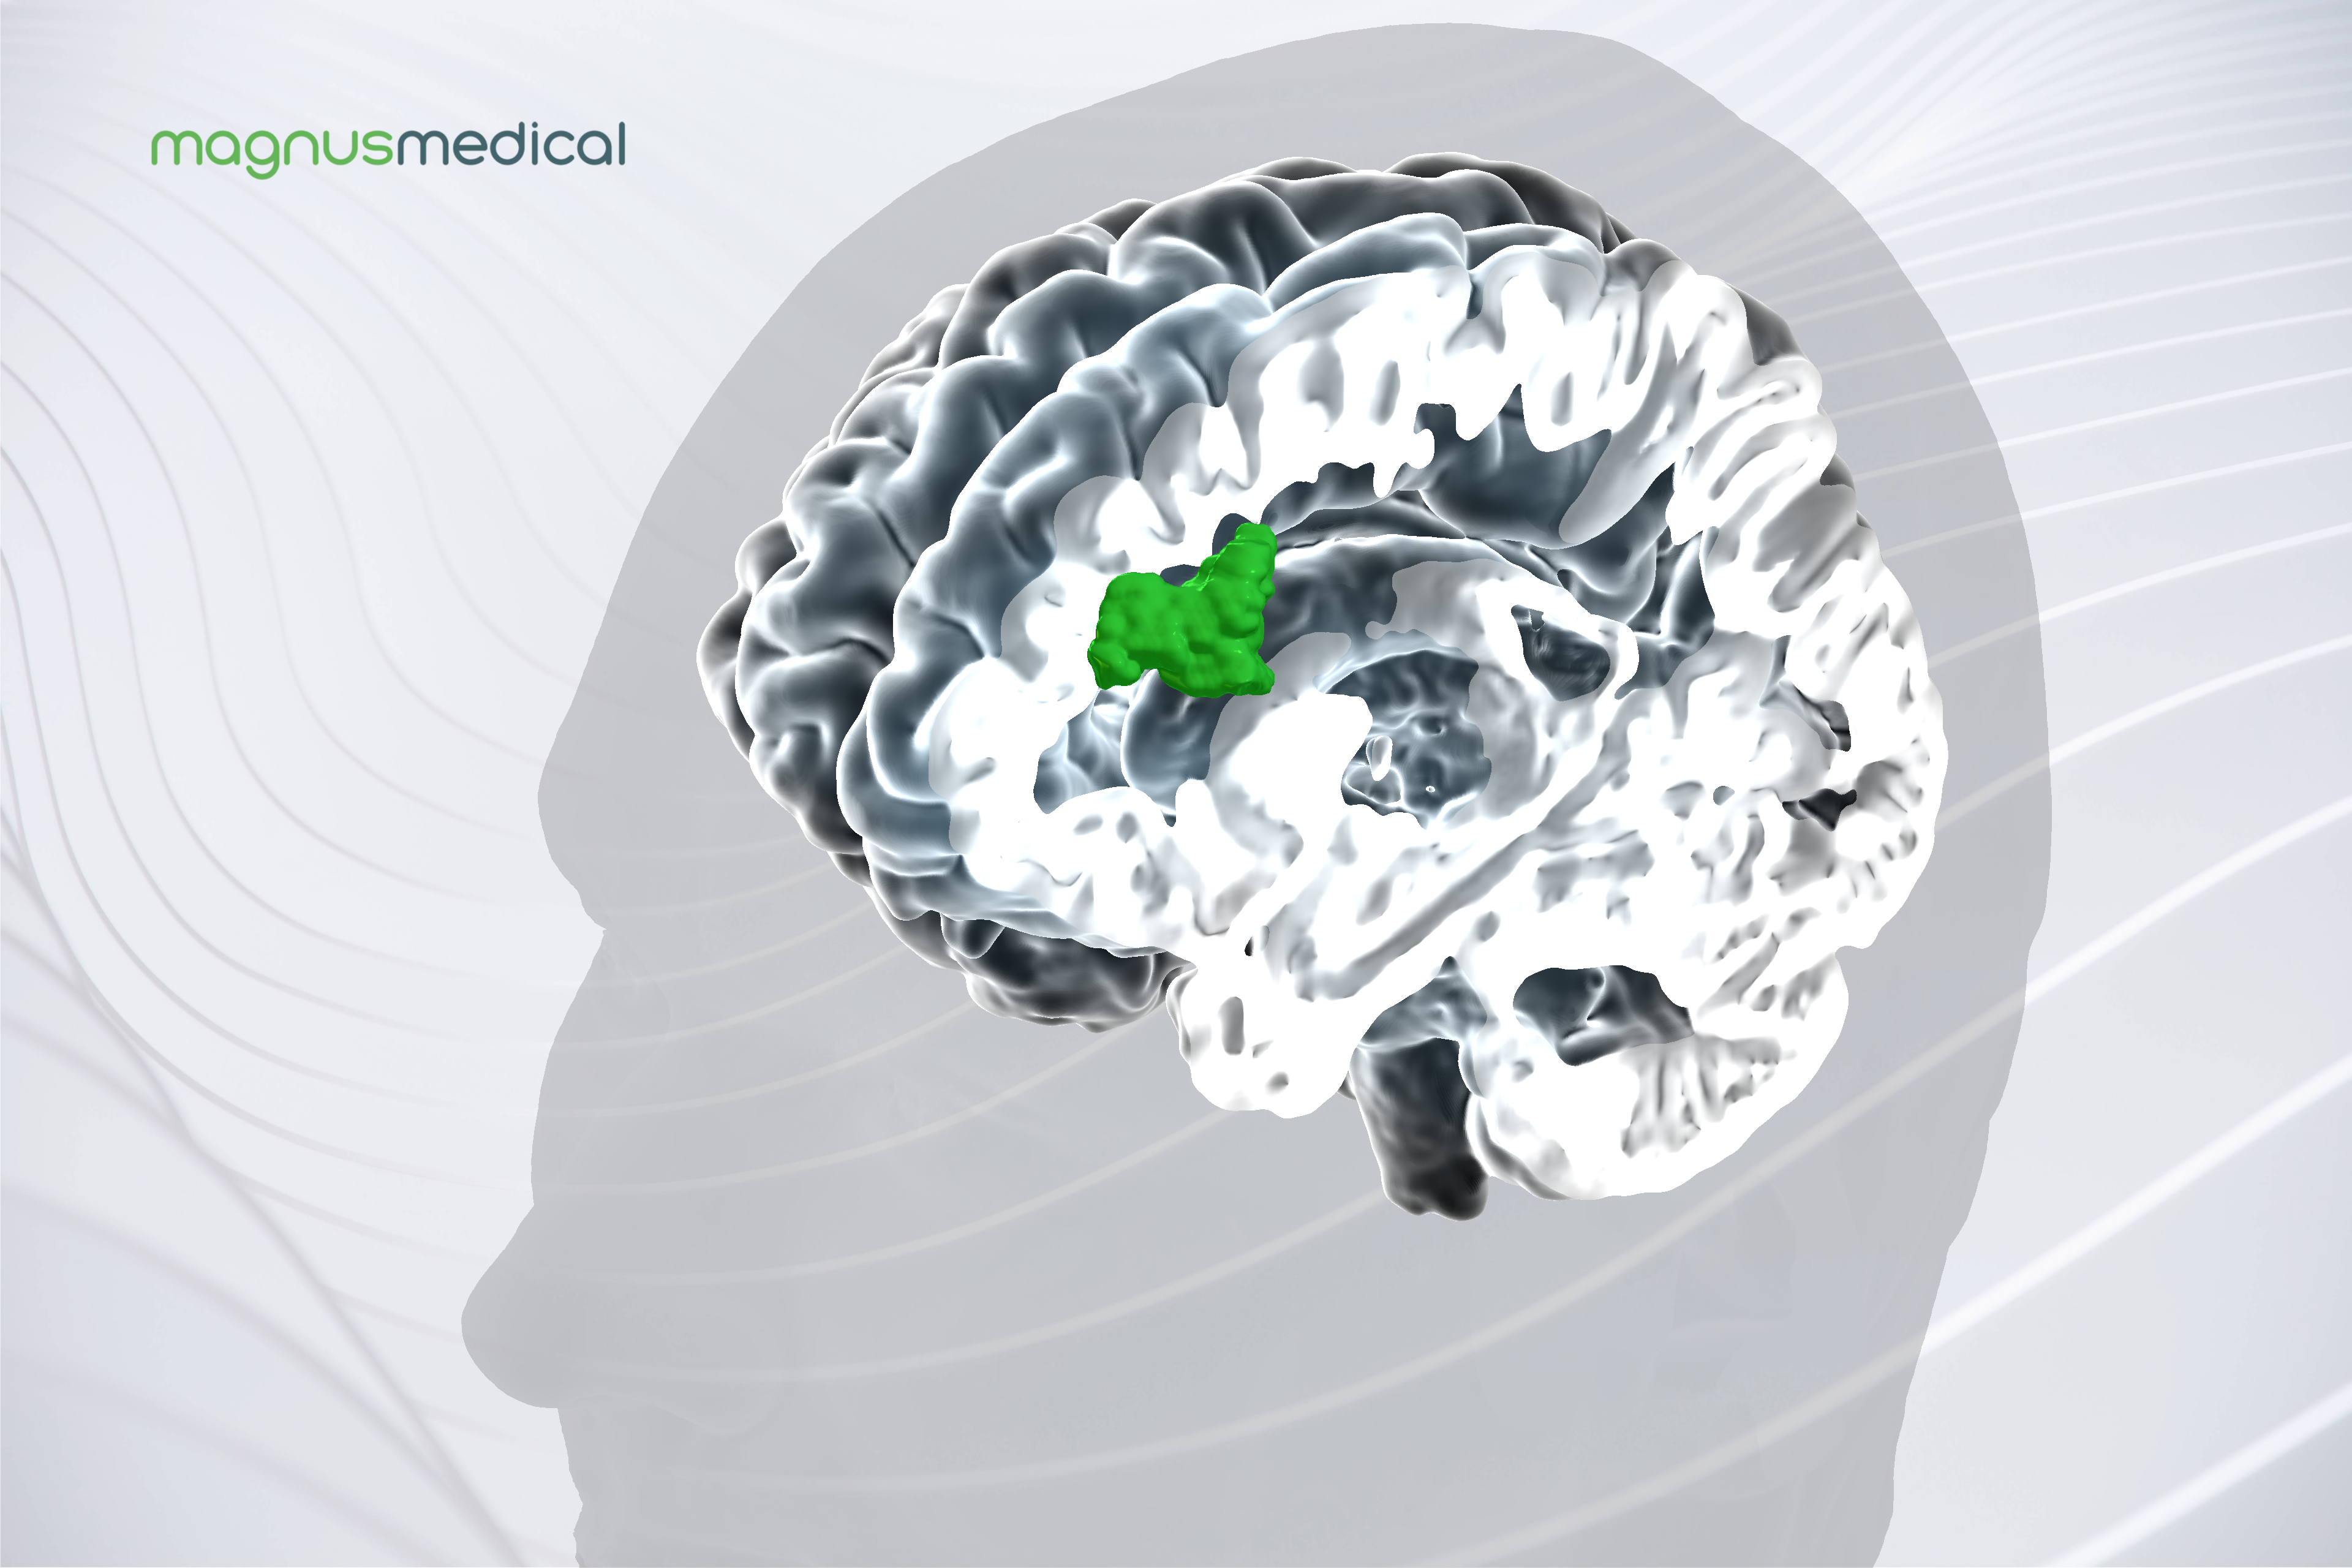 MagnusMedical brain image highlighting SAINT Neuromodulation